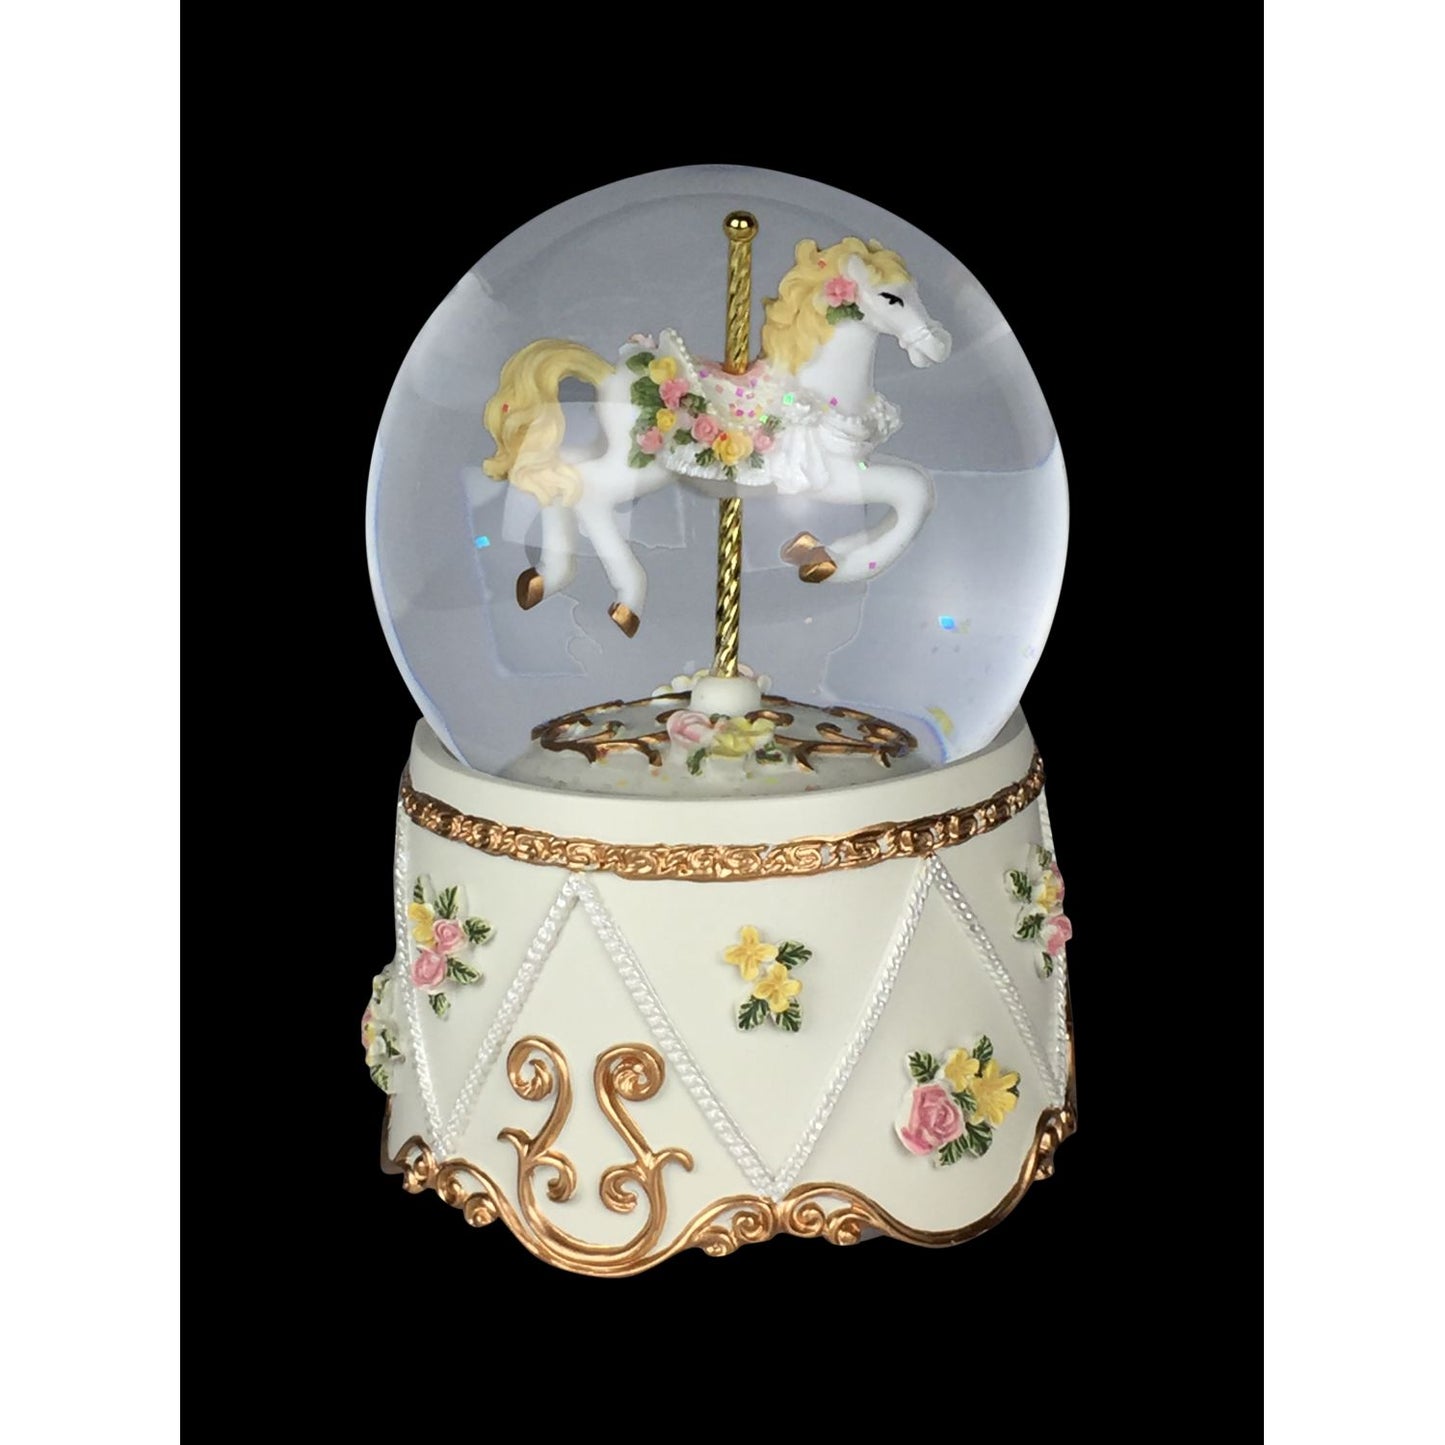 Musicbox Kingdom 3.9" Glitter Globe With Carousel Horse